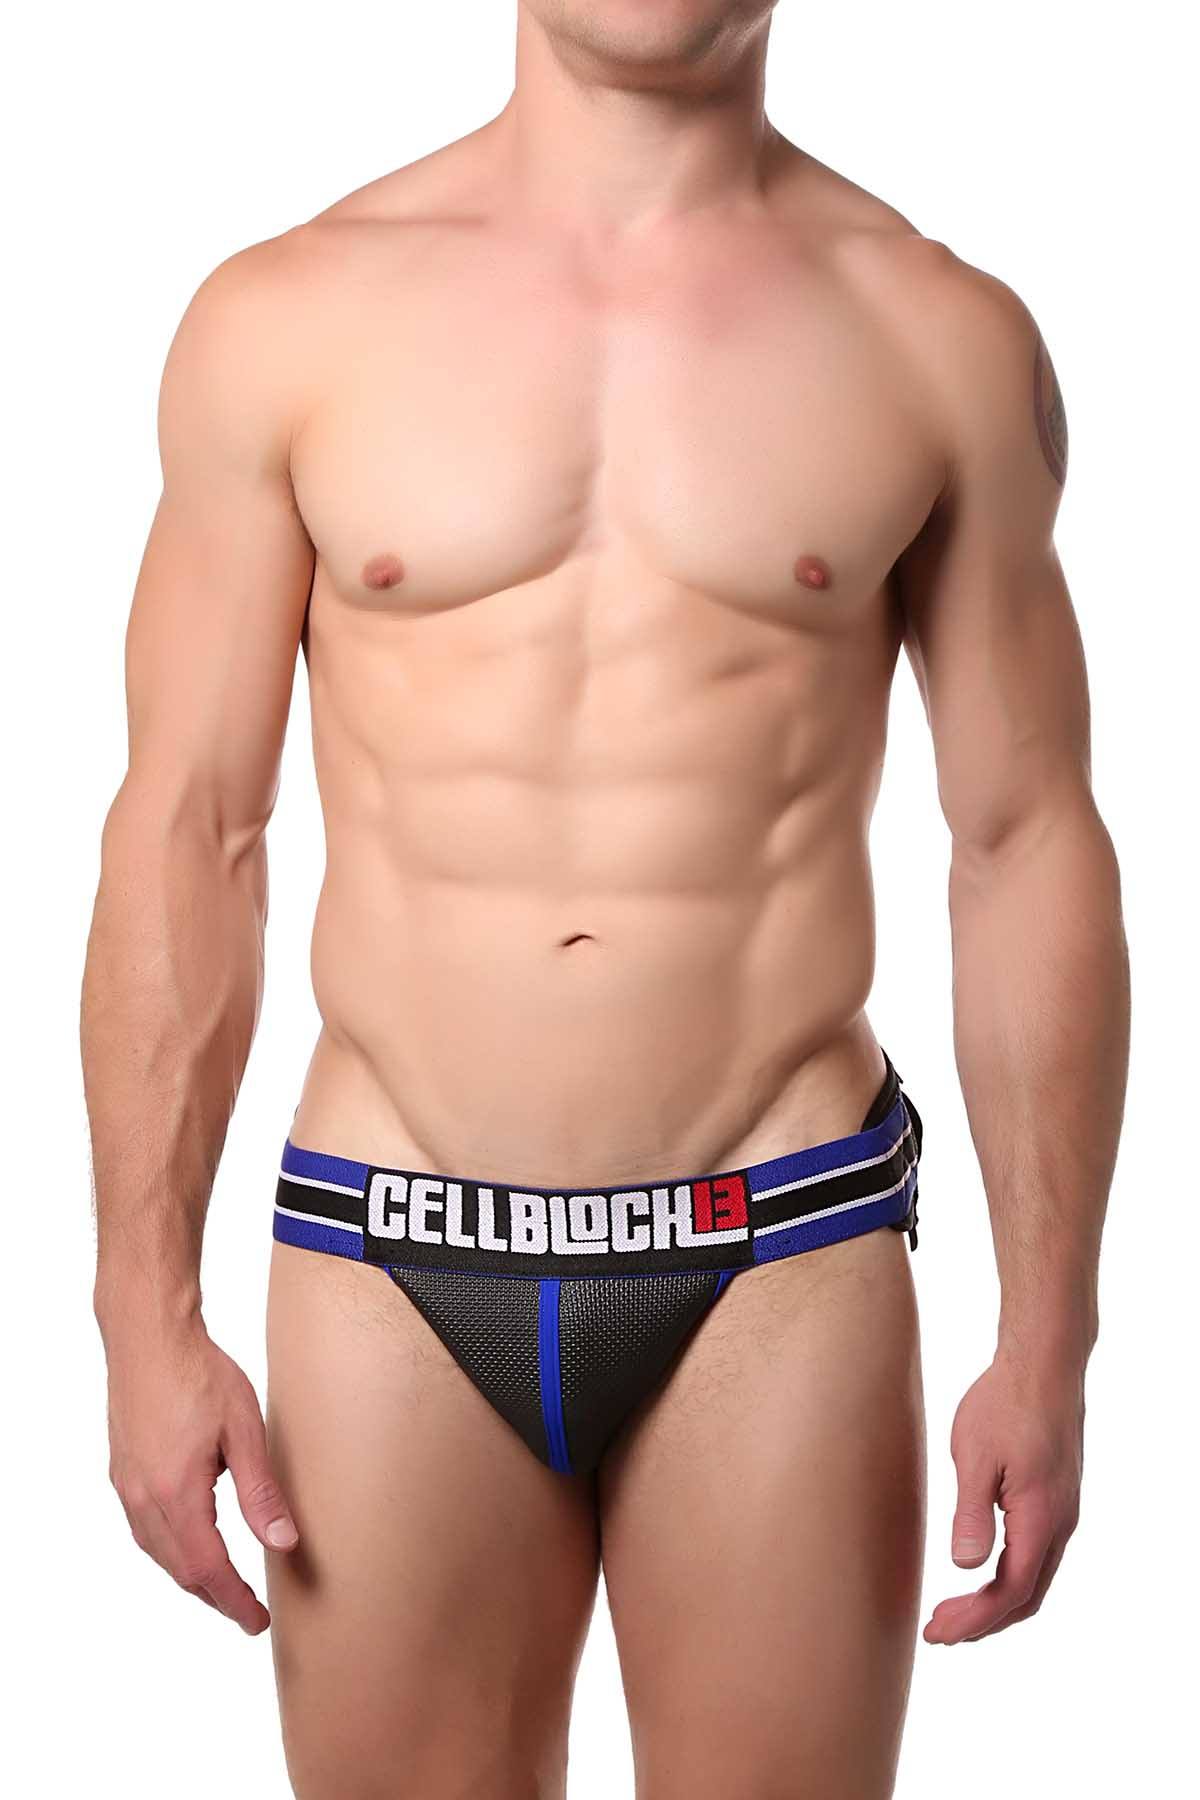 CellBlock 13 Blue Smuggler Jock Pack